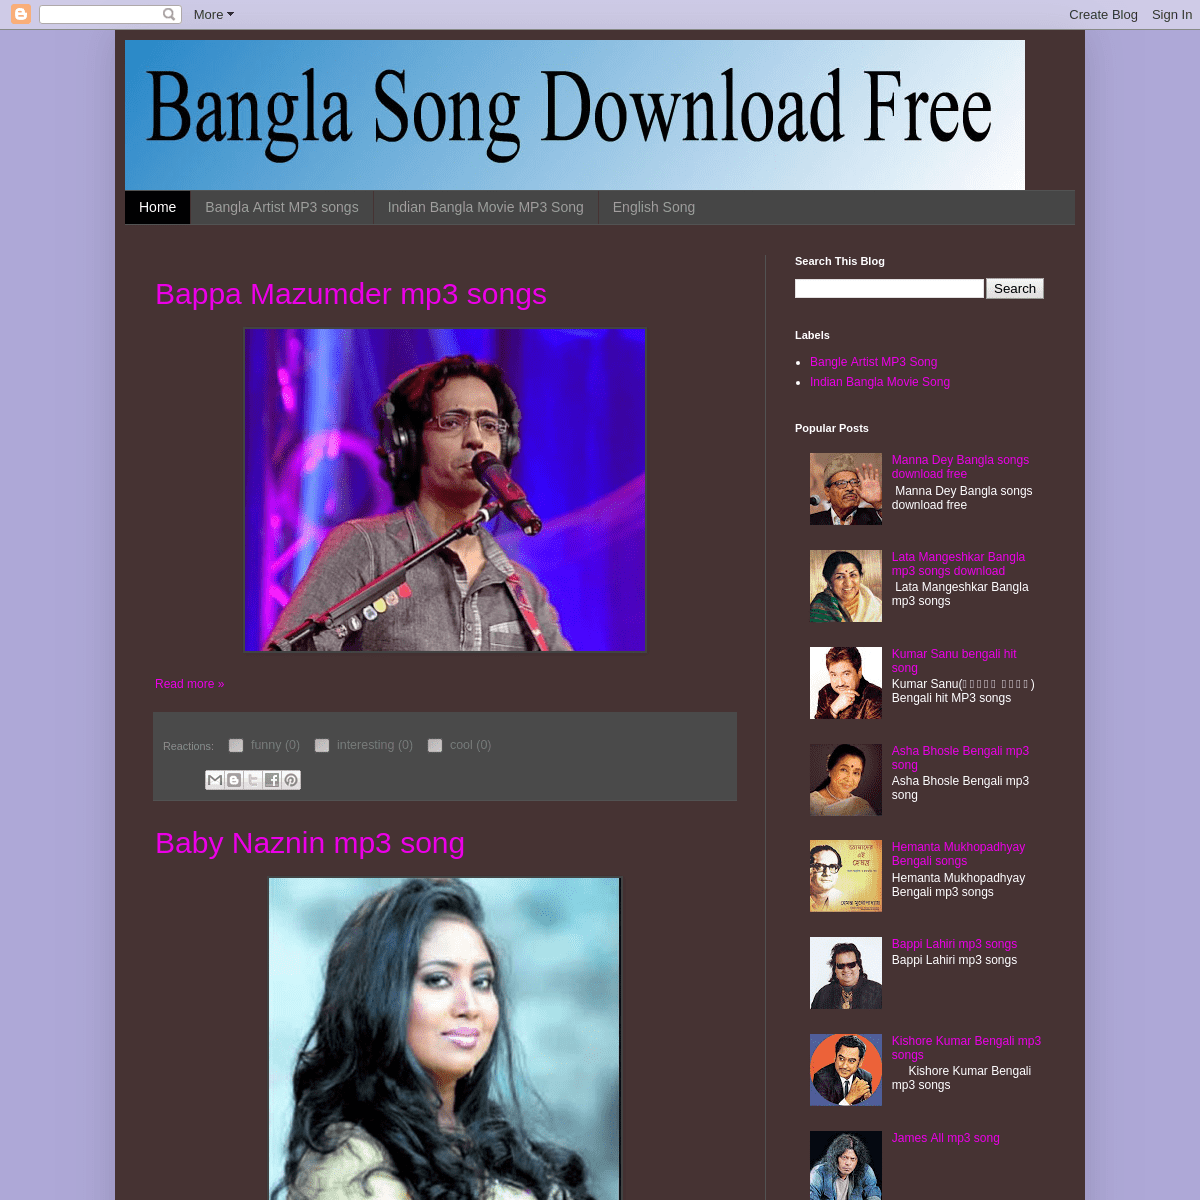 asha bhosle bengali song free download mp3